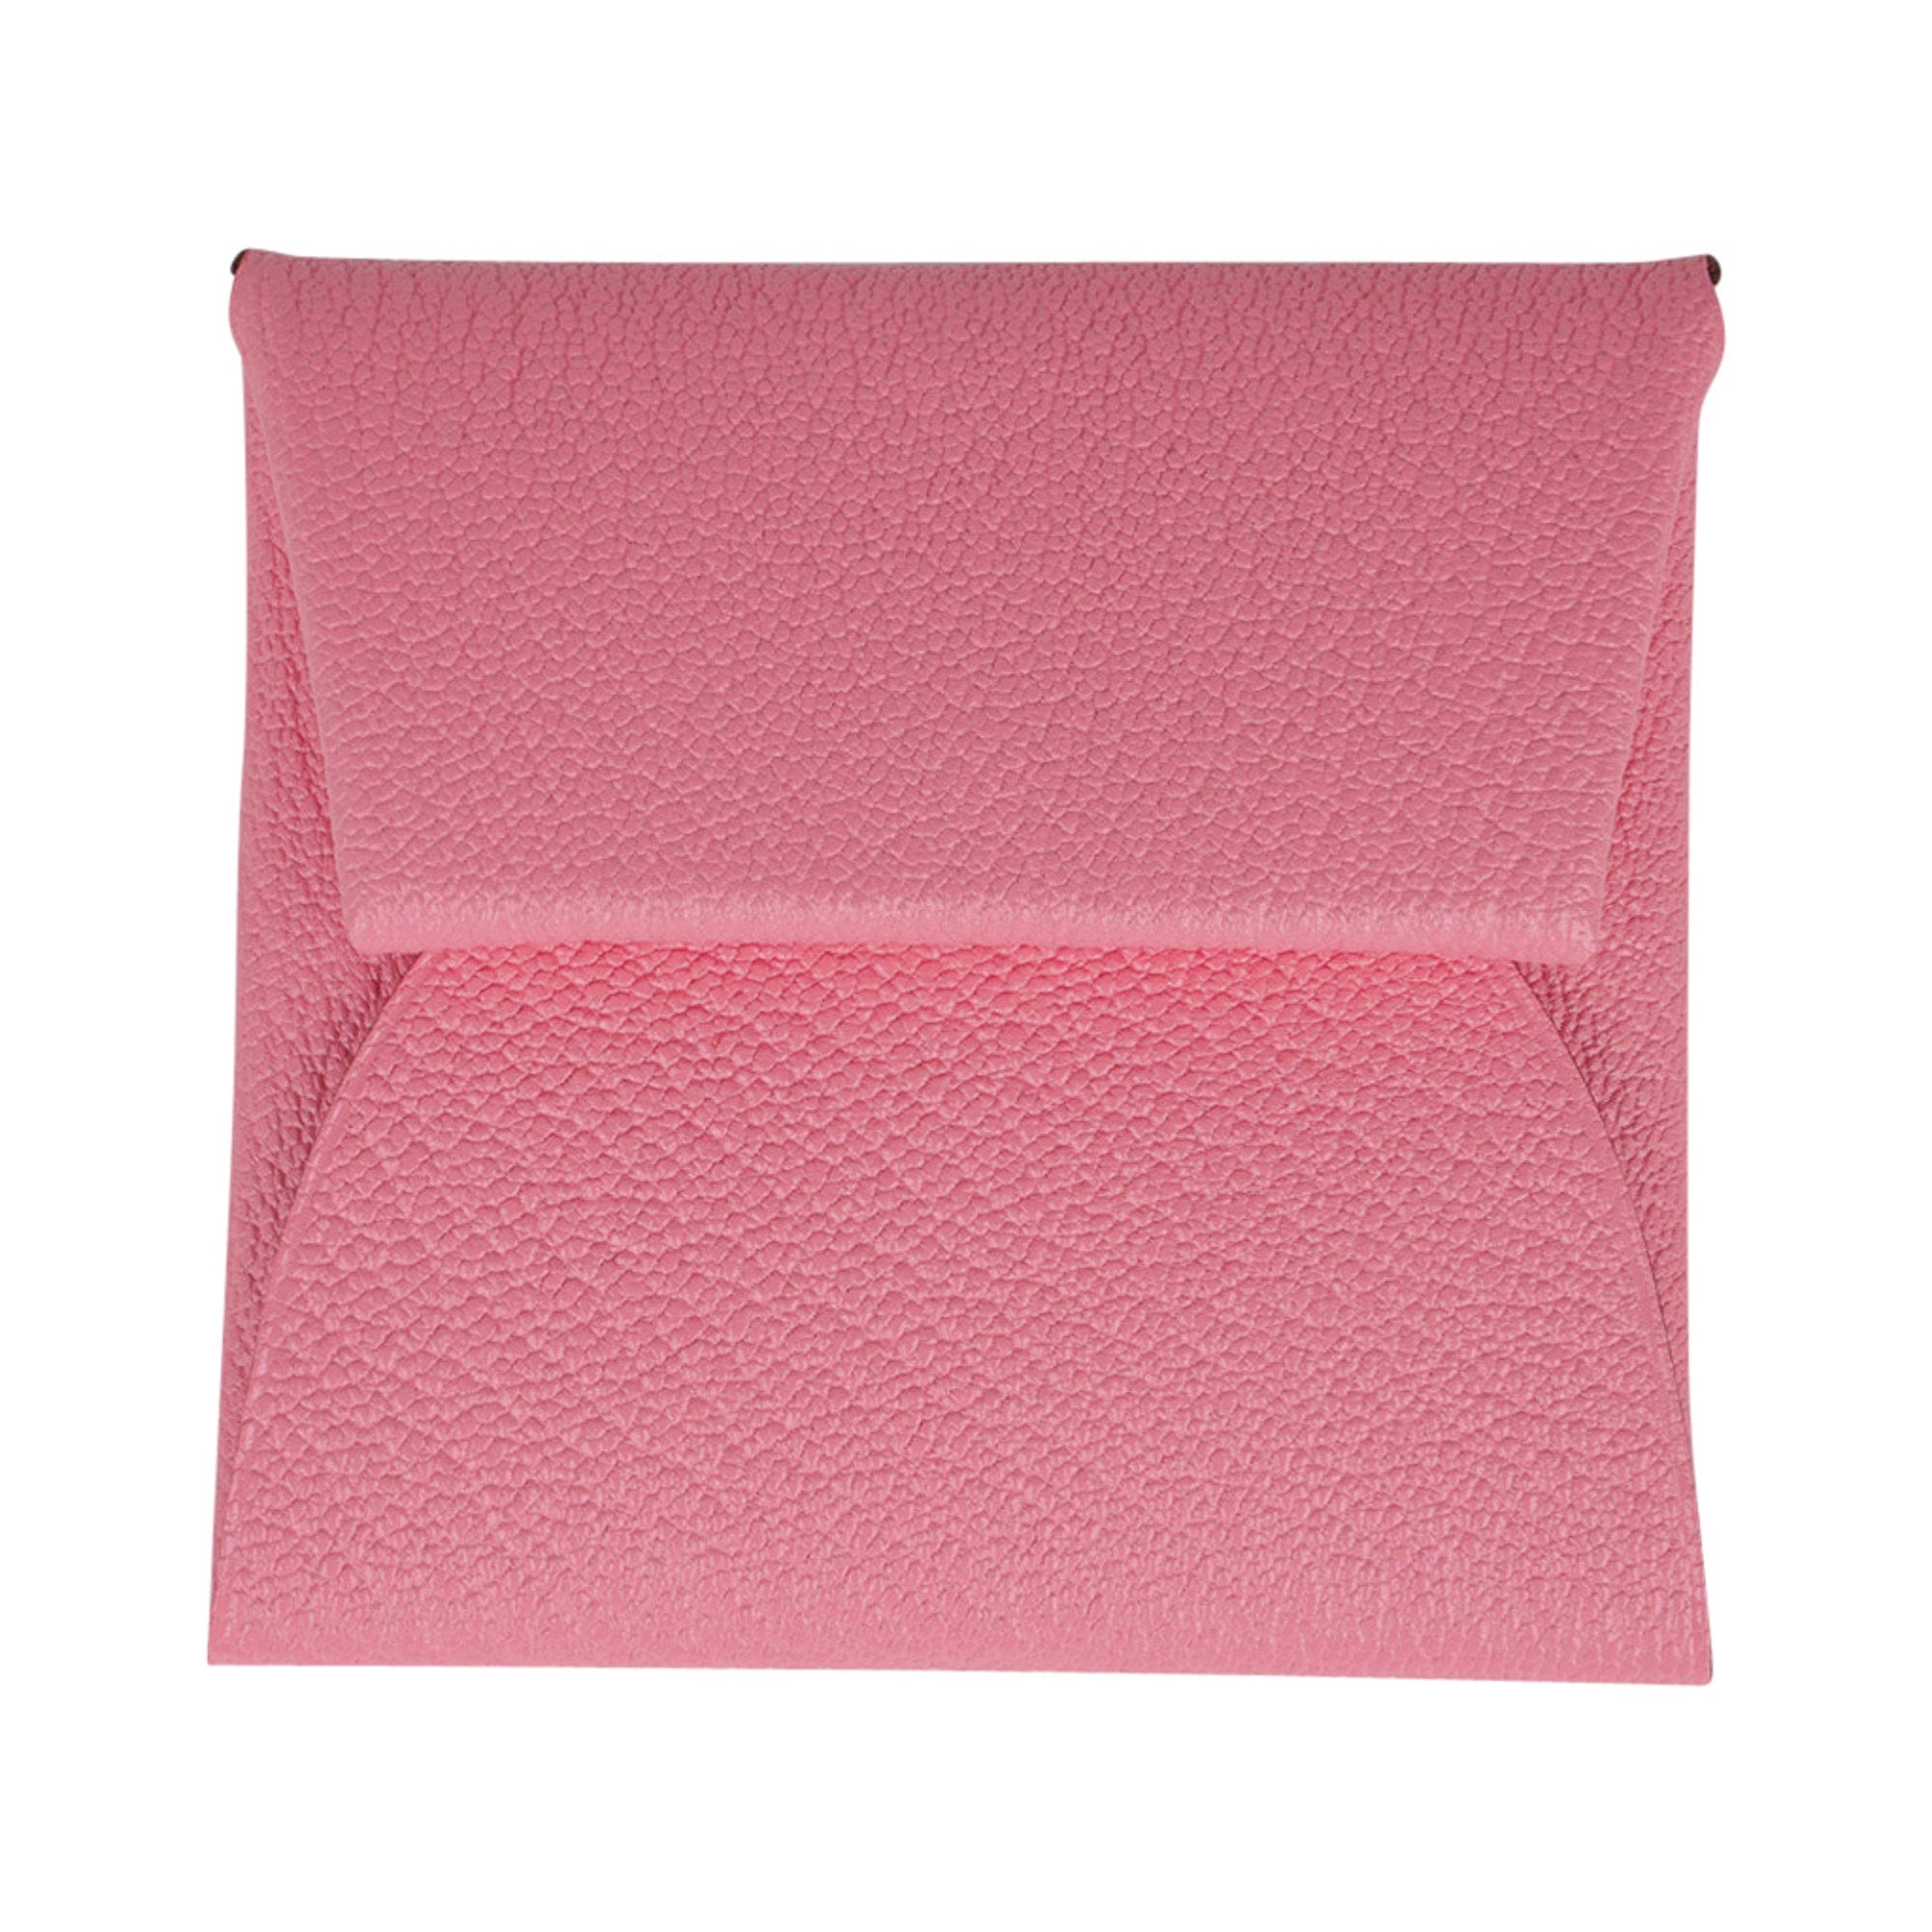 Hermes Bastia Verso Change Purse Rose Confetti / Brique Chevre Leather